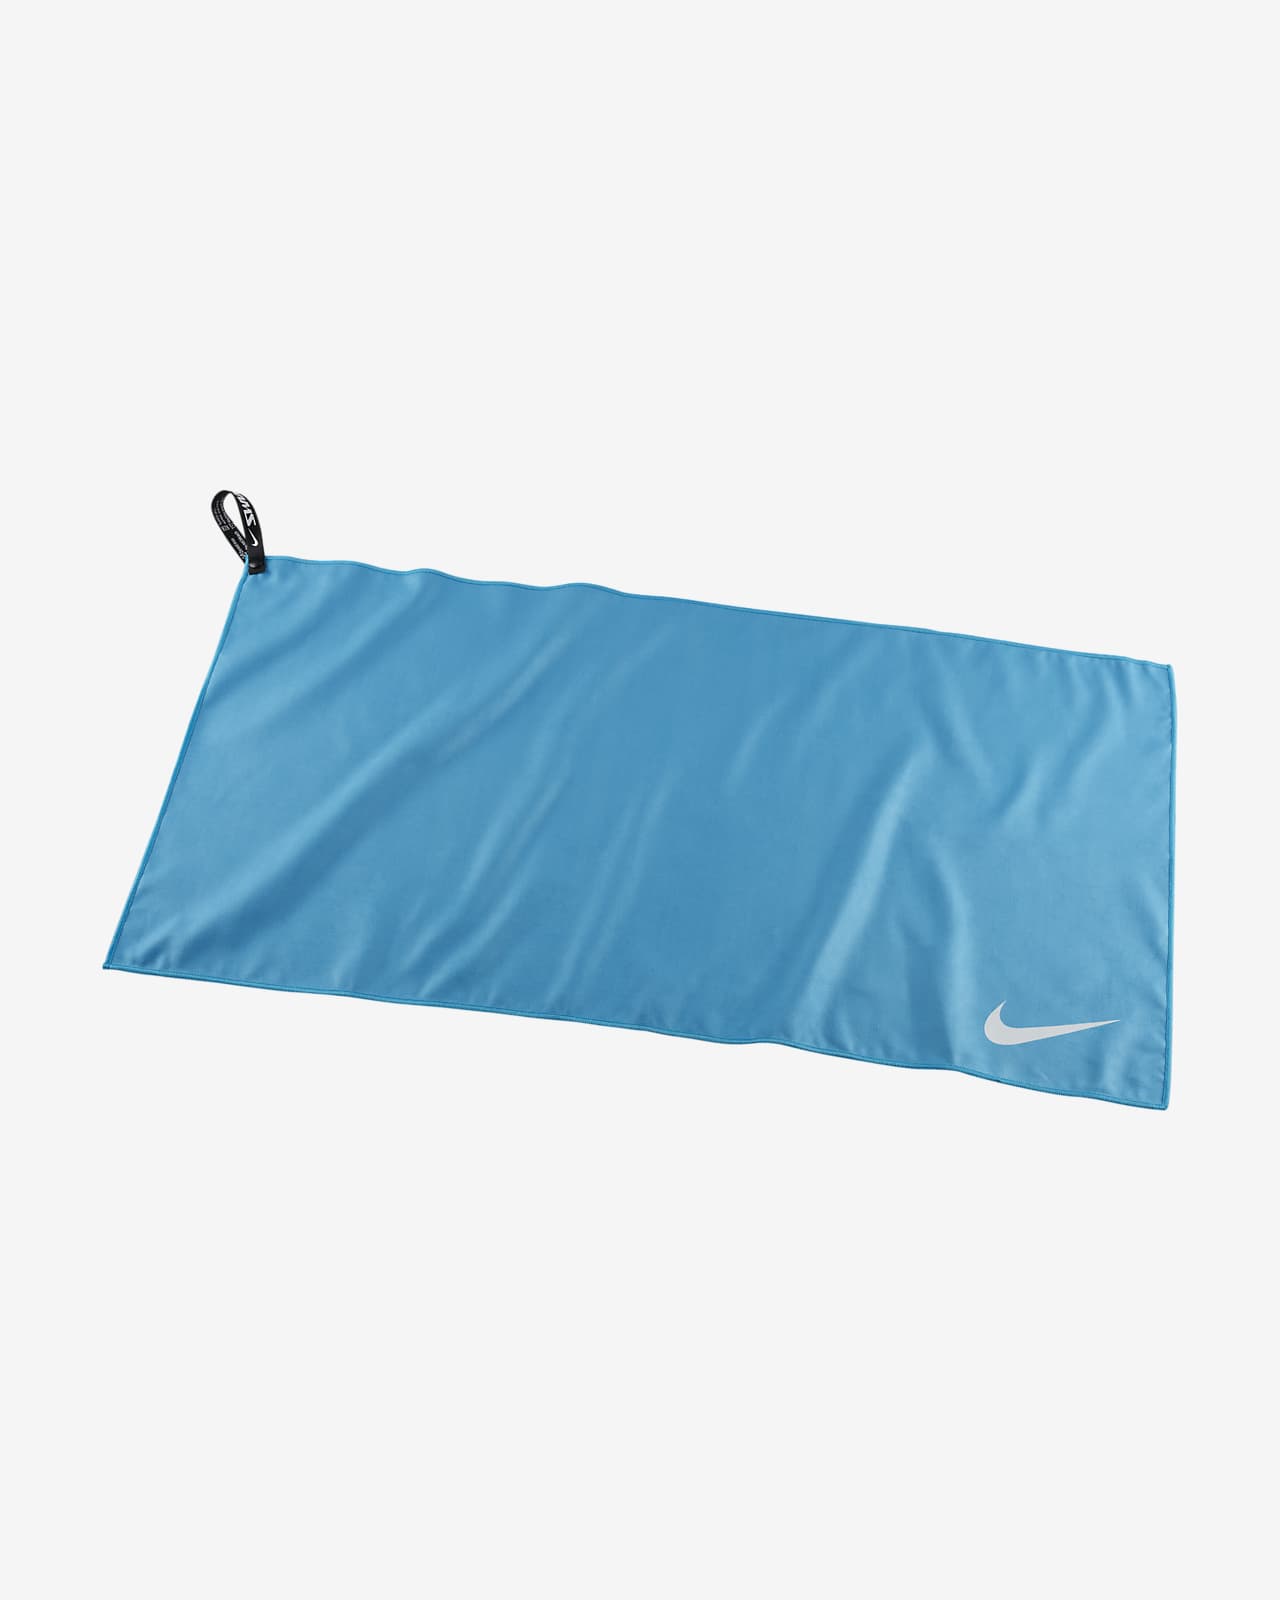 Nike Quick-Dry Swim Towel